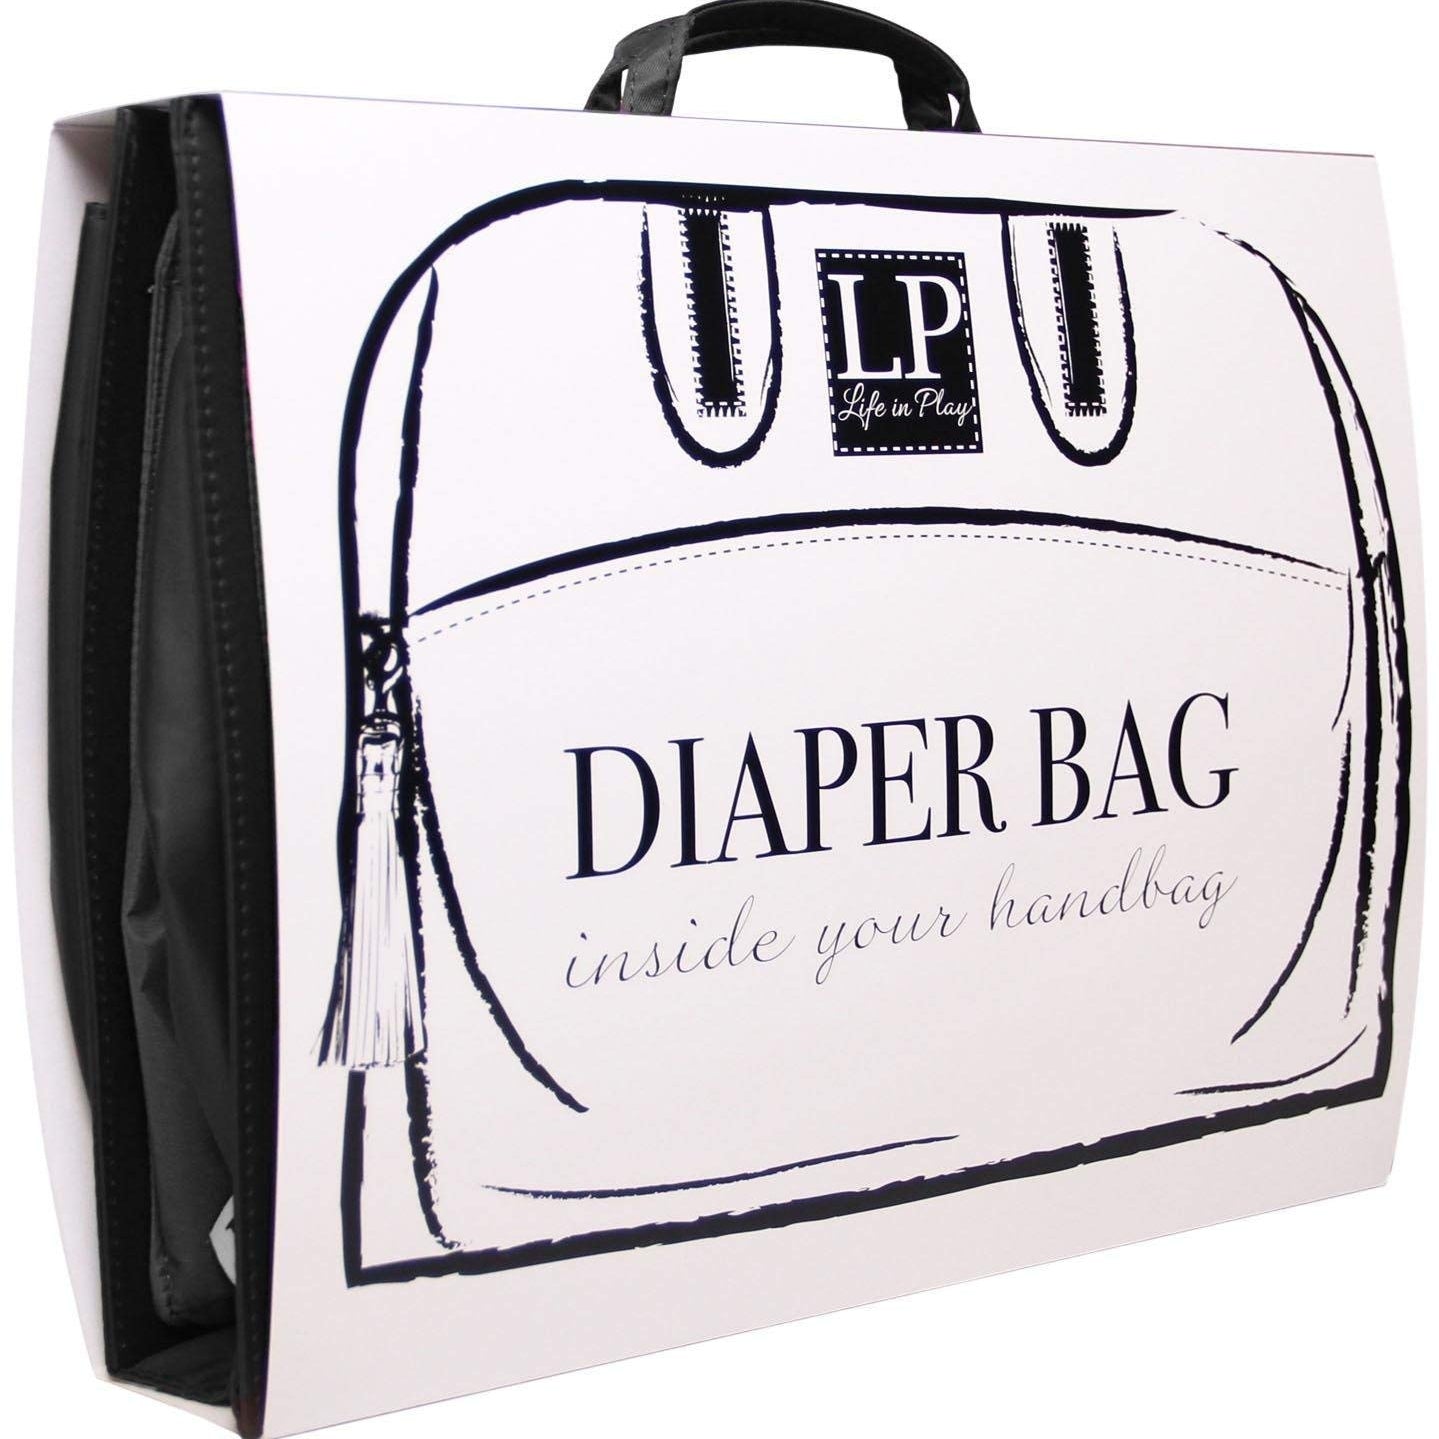 Original Diaper Bag Inserts